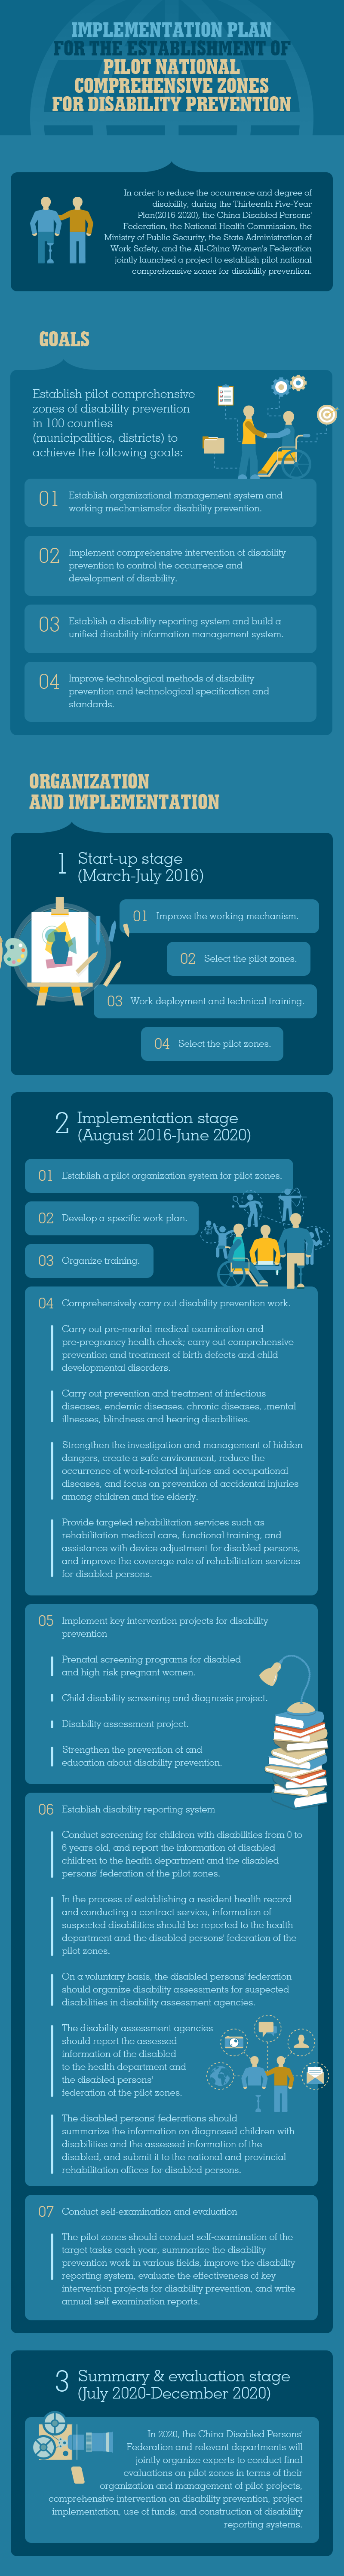 Implementation plan for the establishment of pilot national comprehensive zones for disability prevention